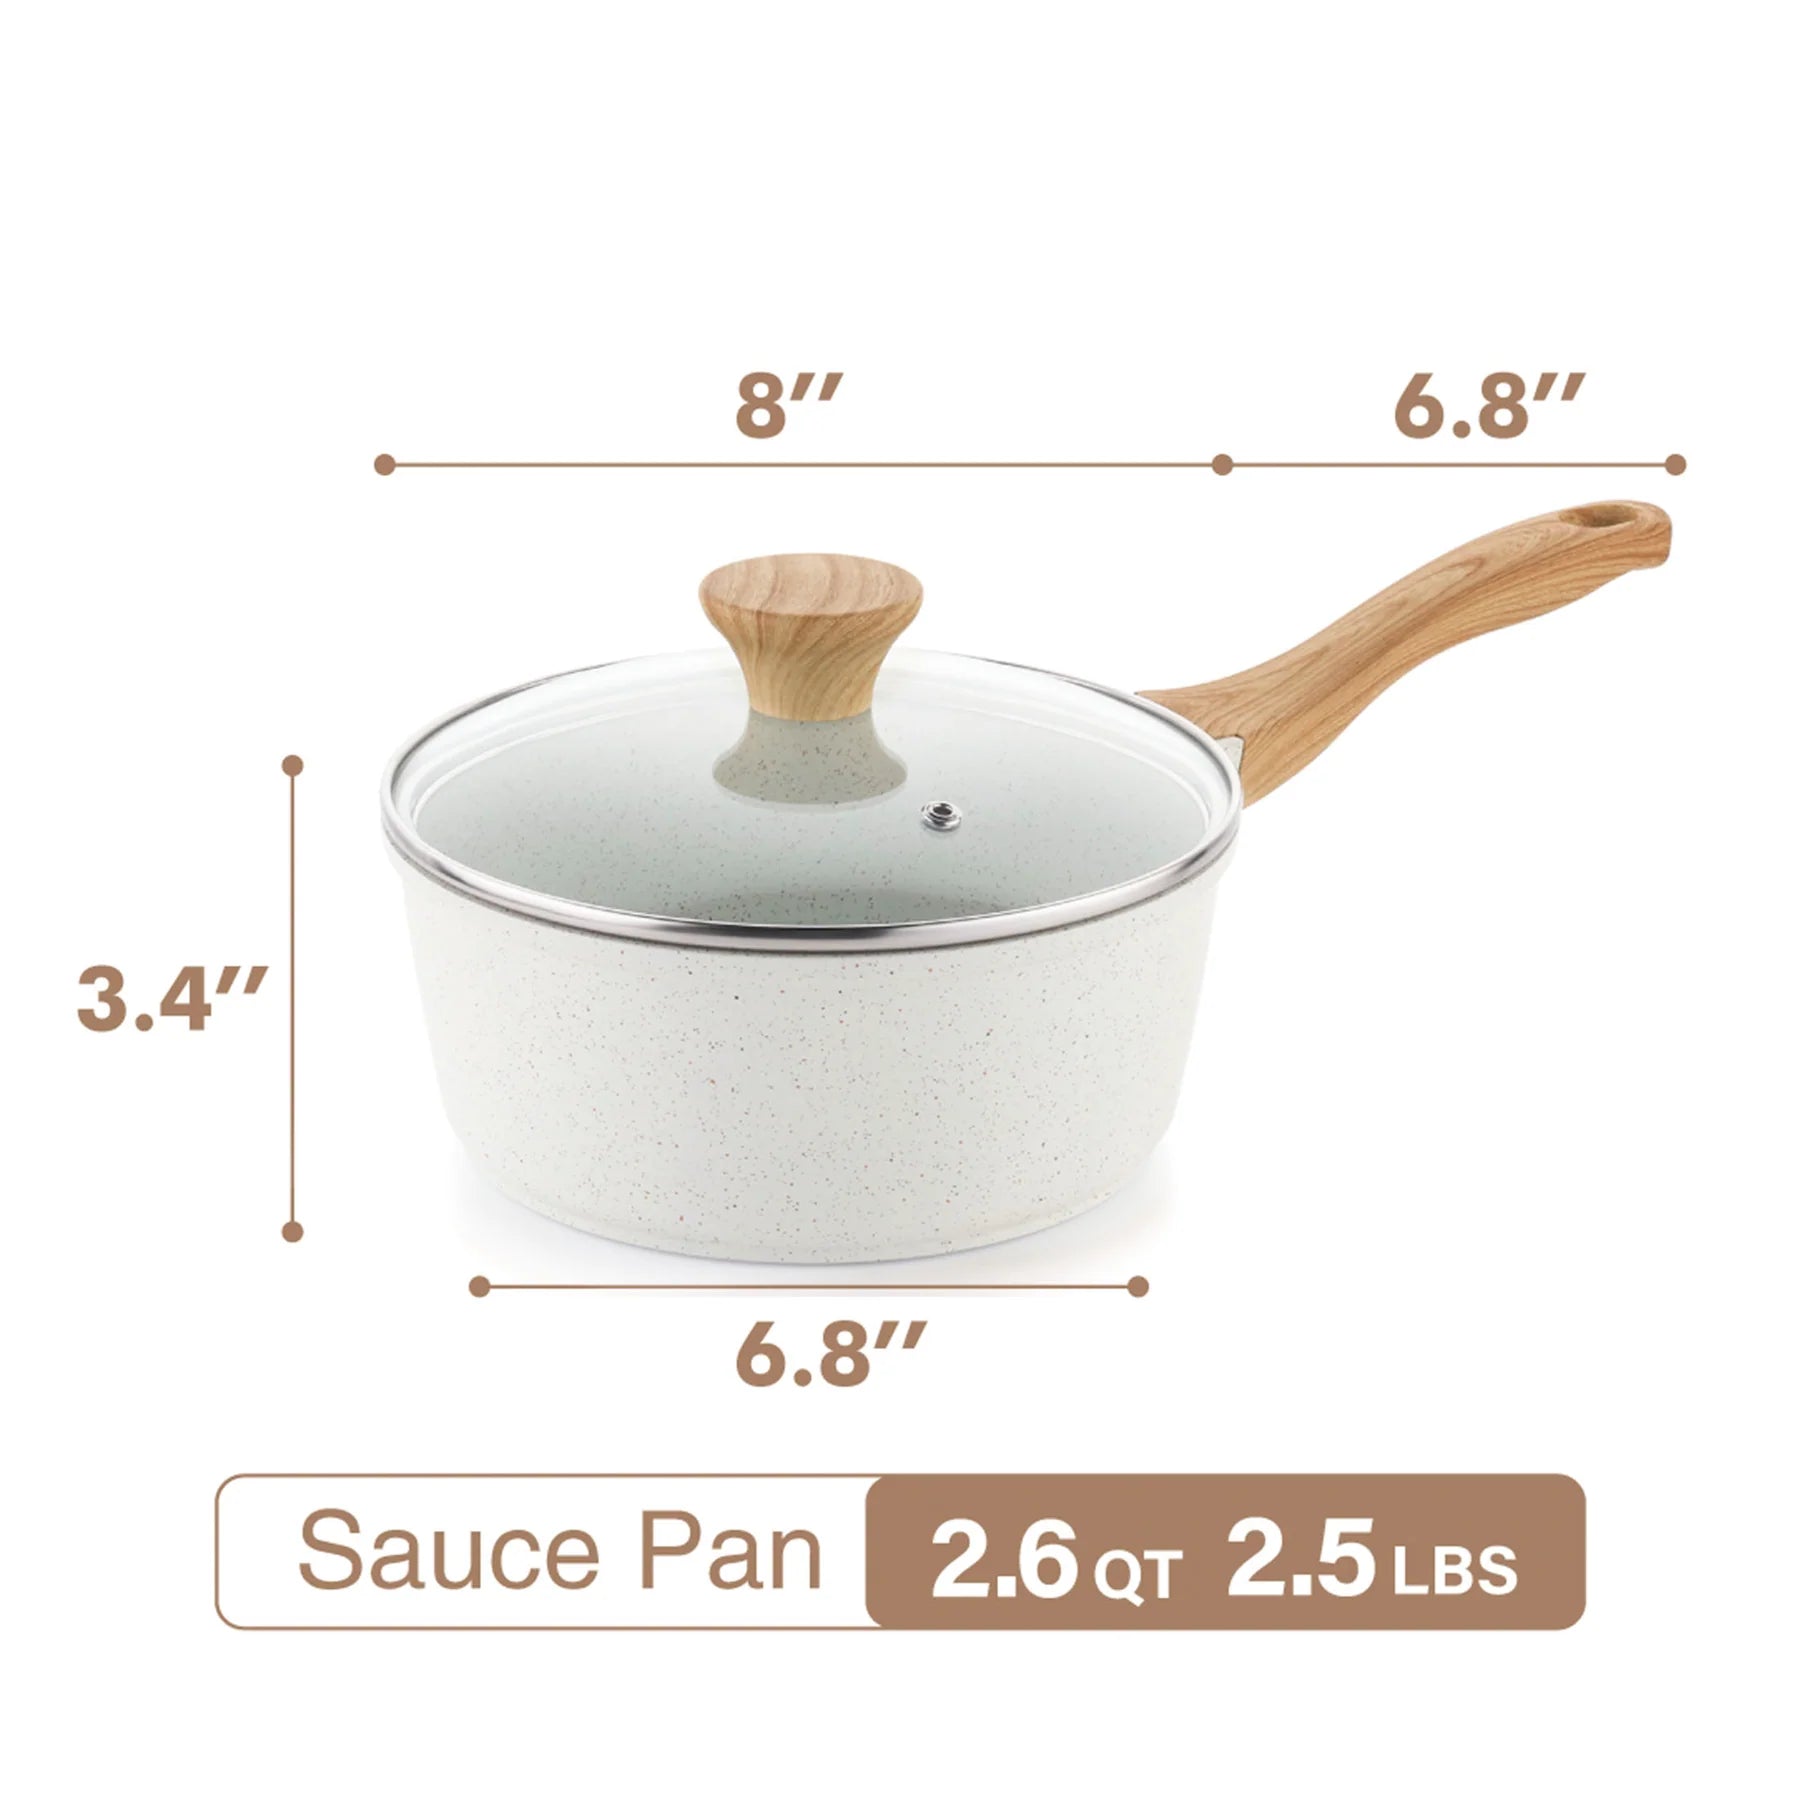  SENSARTE Nonstick Ceramic Cookware Set 13-Piece